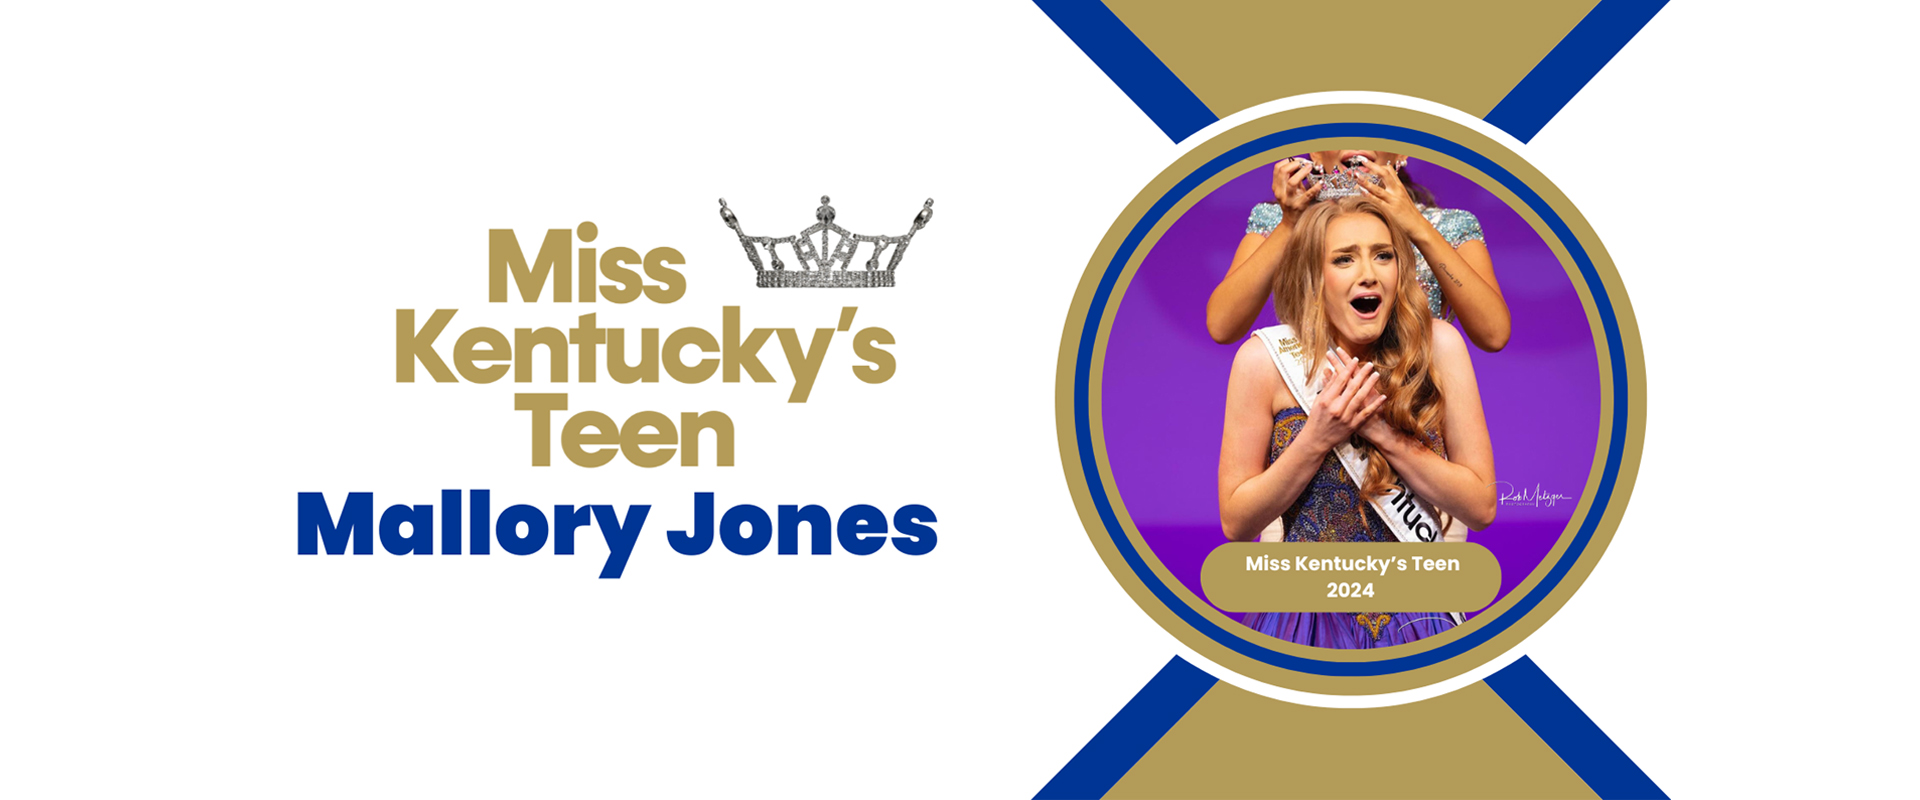 Miss Kentucky's Teen - Mallory Jones